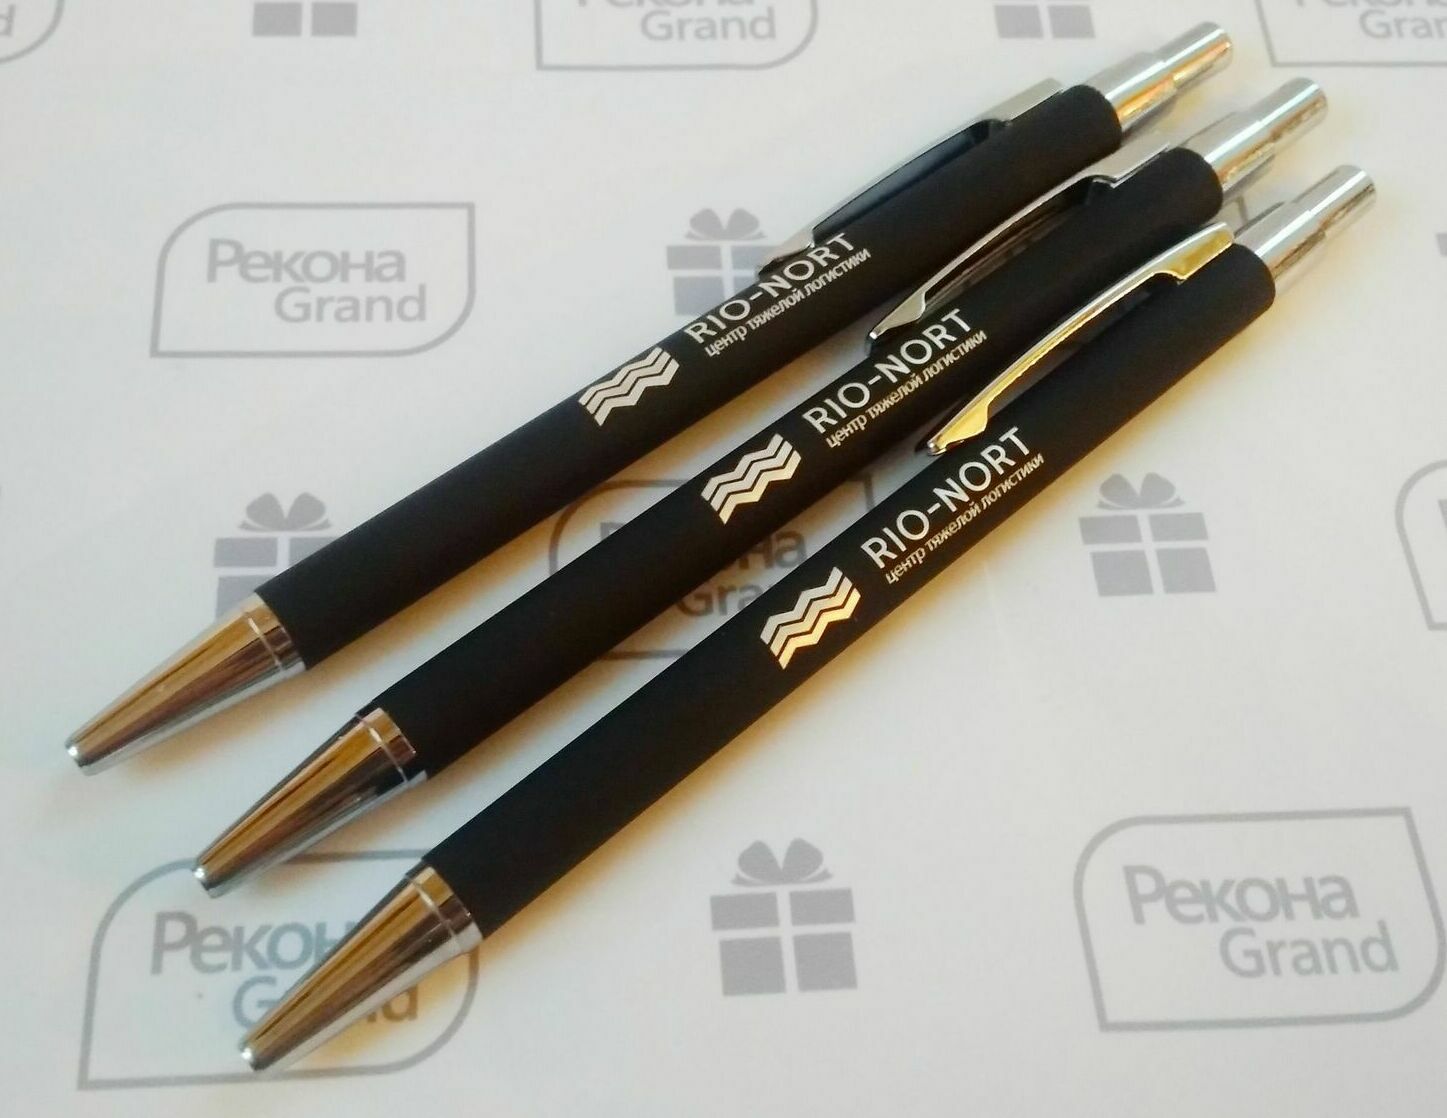 ручки с soft touch покрытием с логотипом